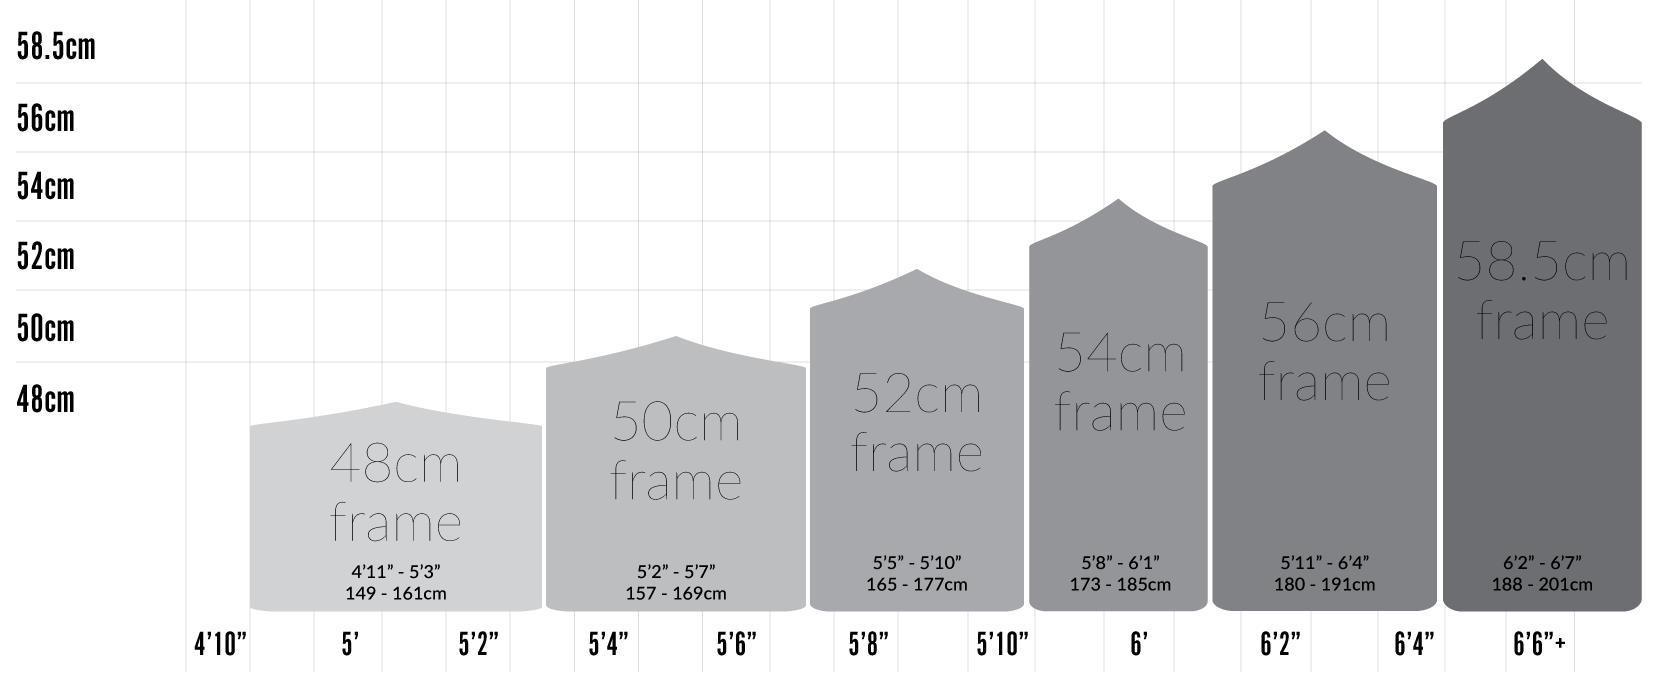 Body Frame Size Chart